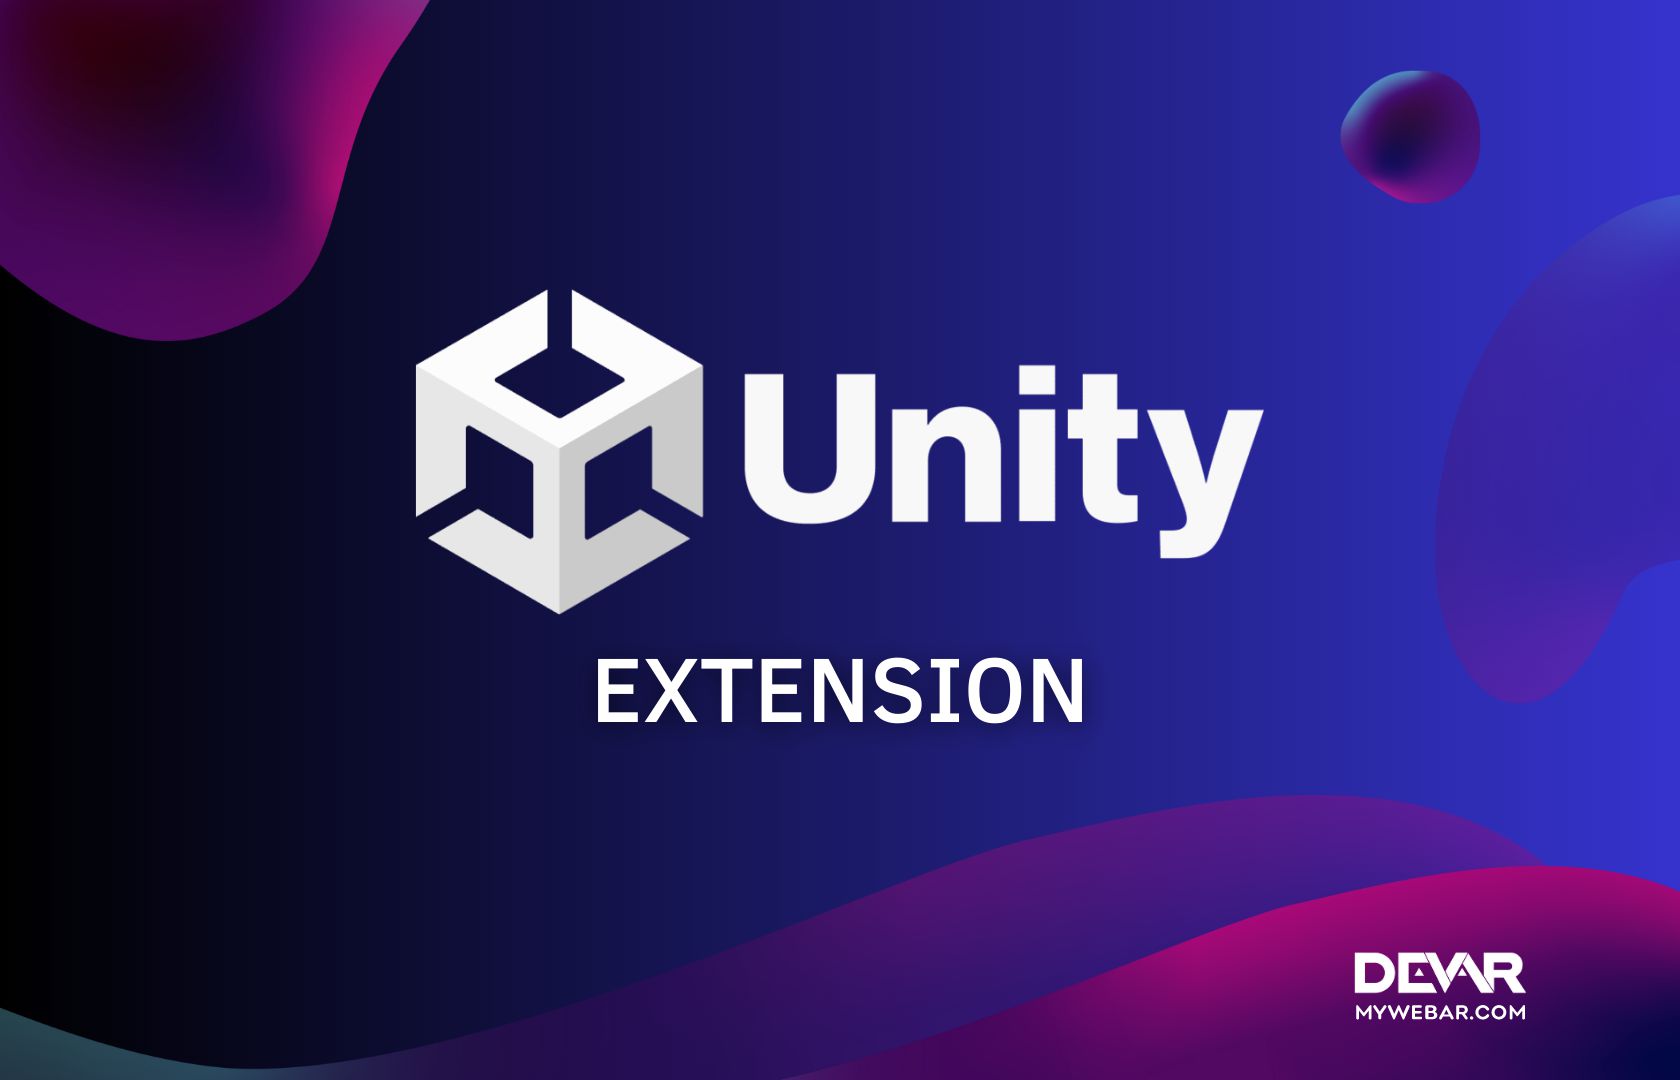 DEVAR Presents the Unity Extension!